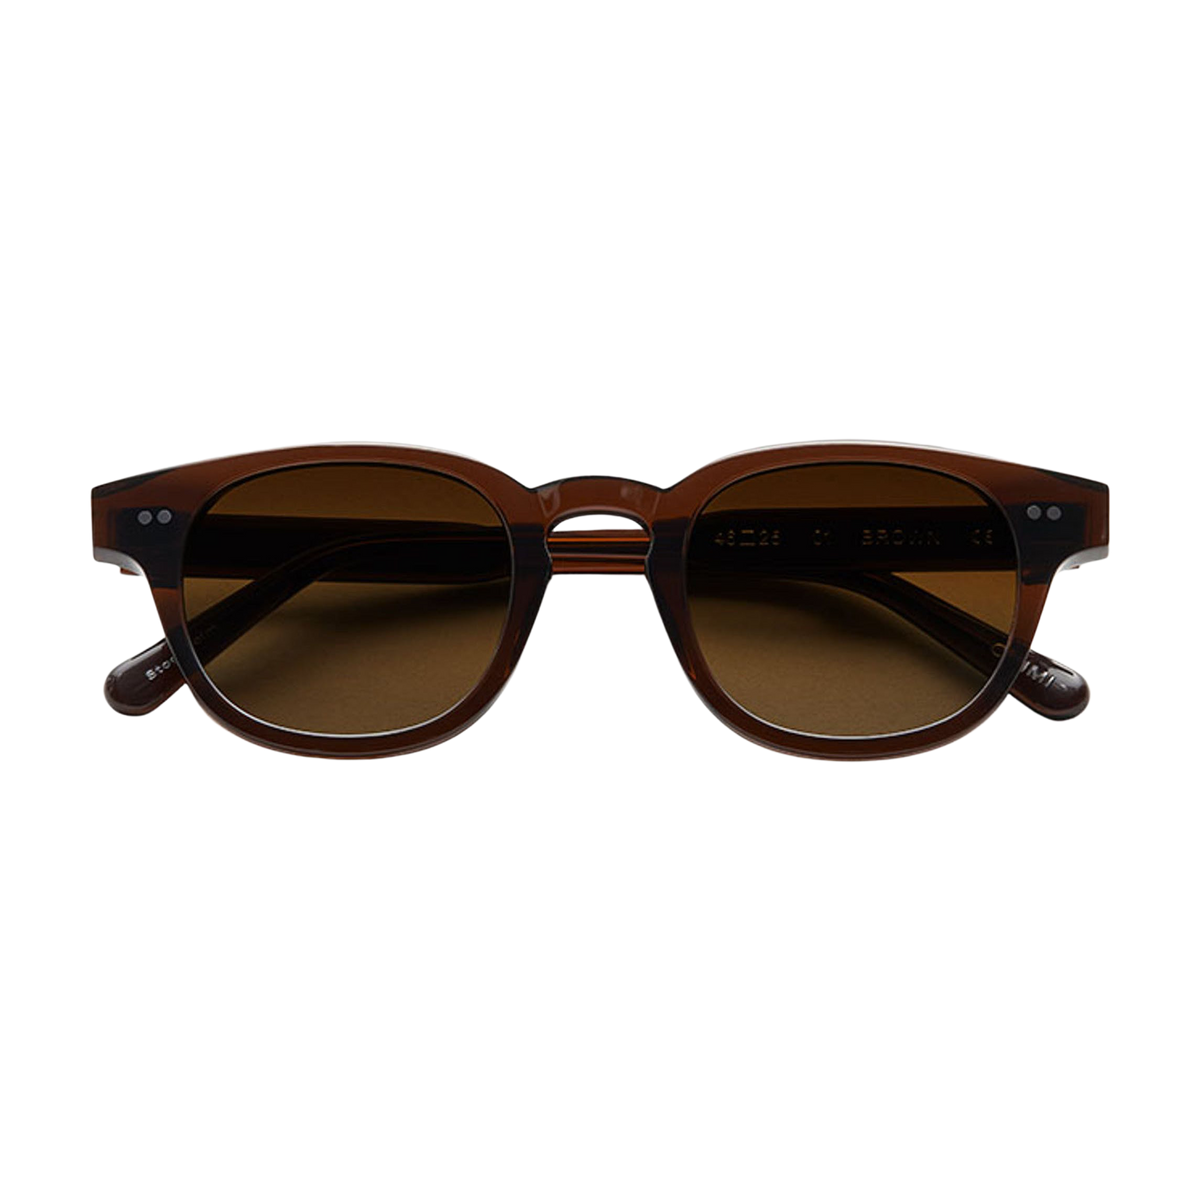 Chimi Eyewear Model 01 Brown Gradient Lenses Sunglasses 46mm Feature